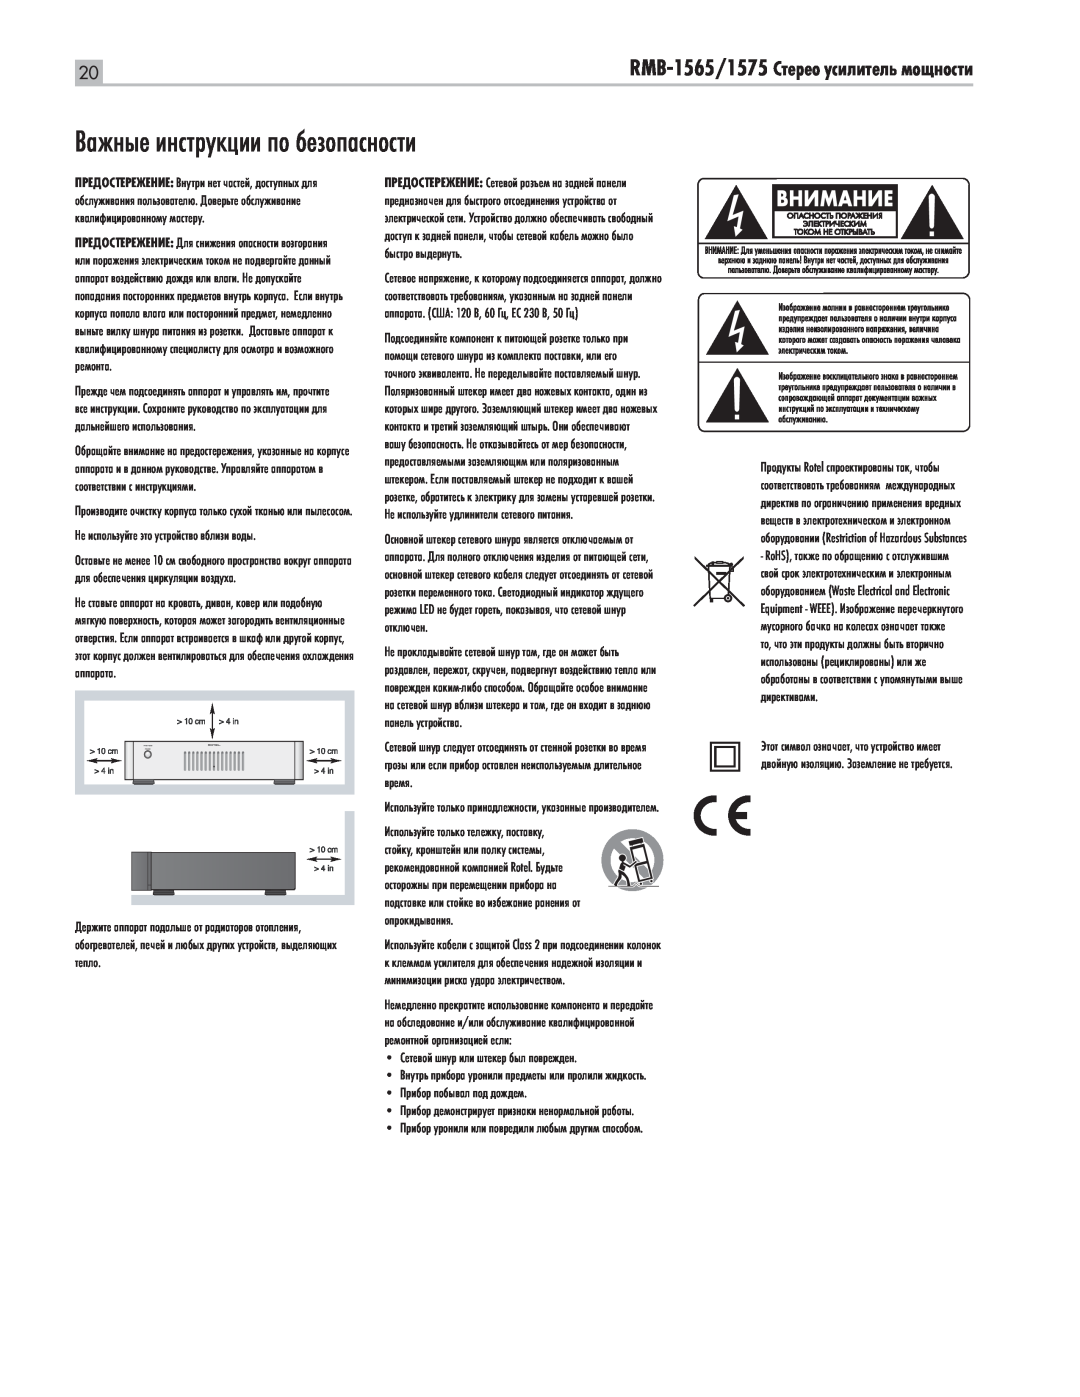 Rotel RMB1575BK manual Важные инструкции по безопасности, RMB-1565/1575 Стерео усилитель мощности 